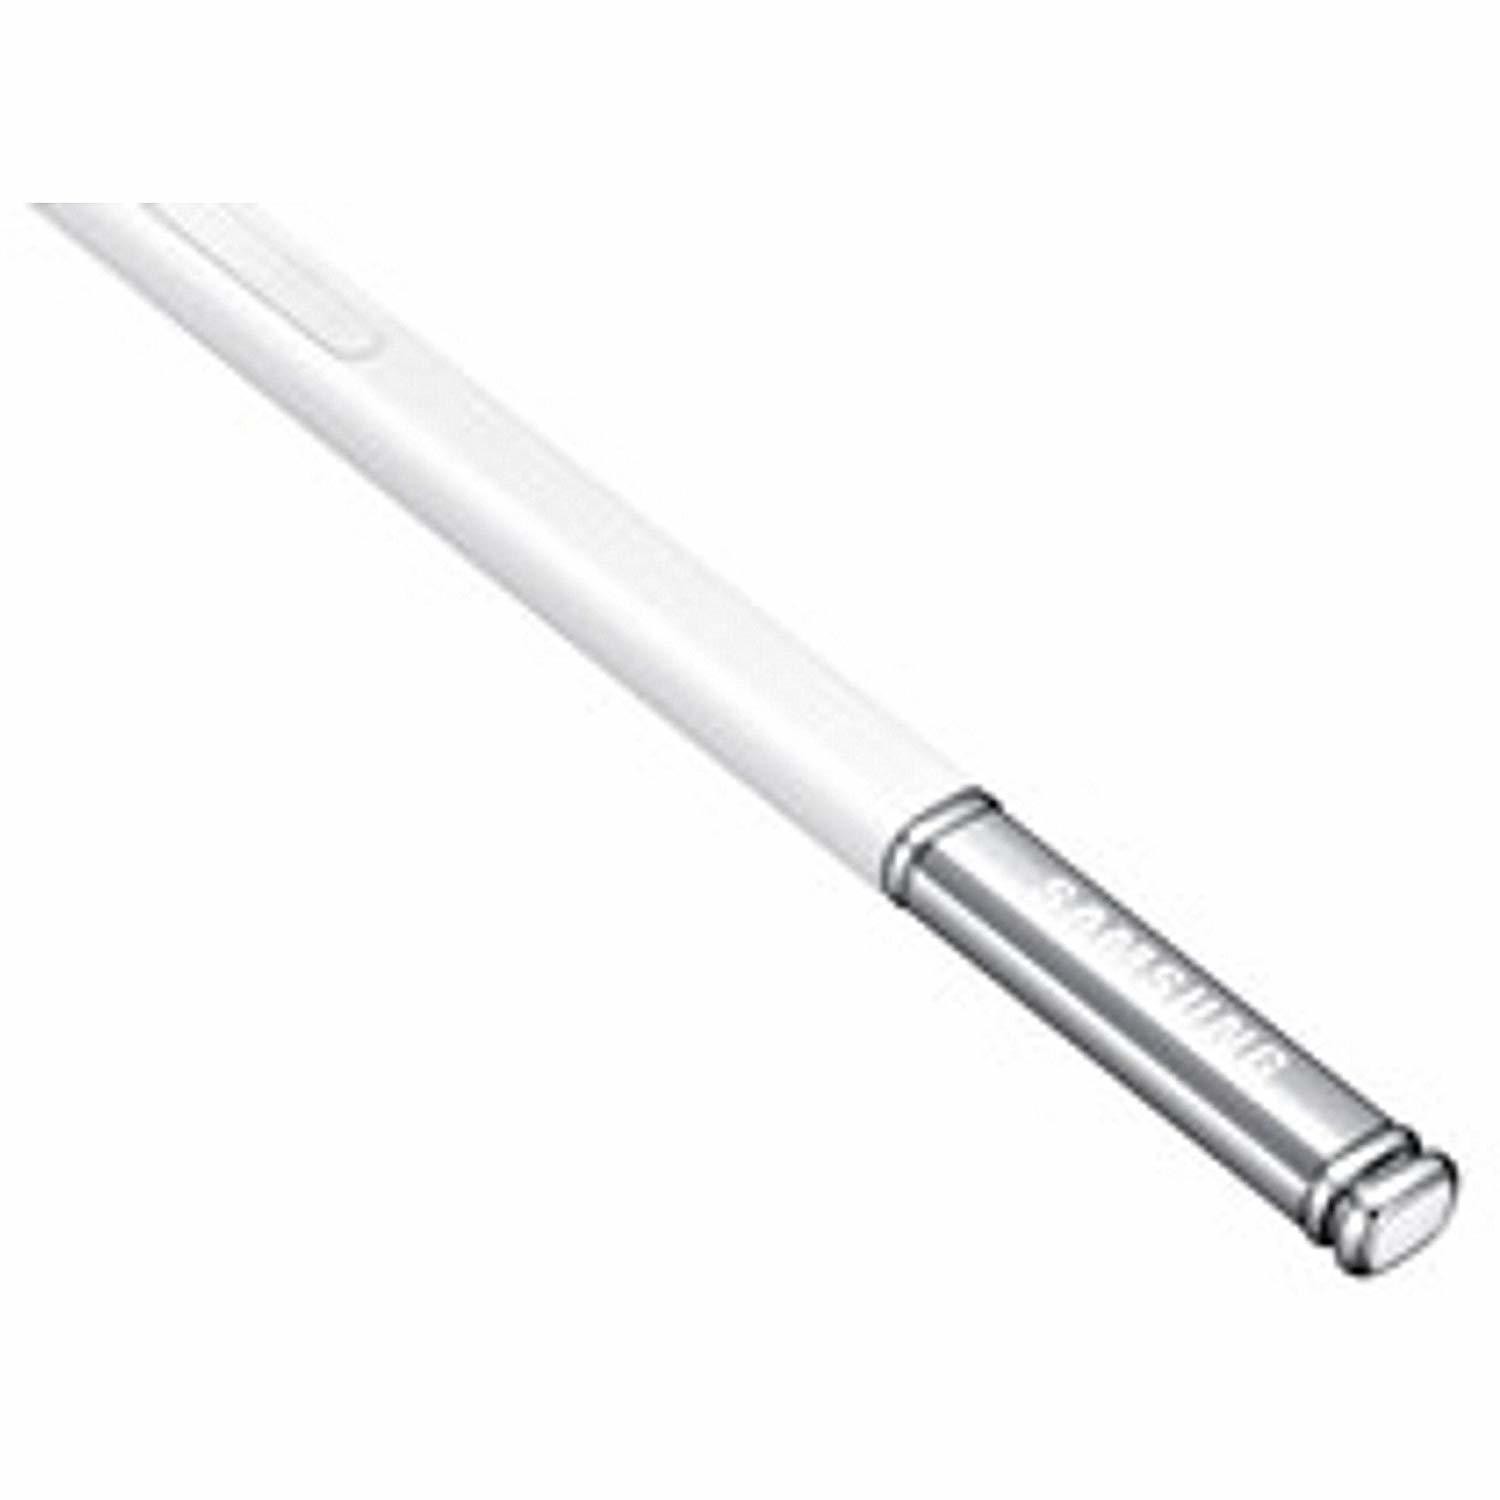 New Oem Samsung Stylus S Pen for Galaxy Note 4 S Pen Stylus (White)